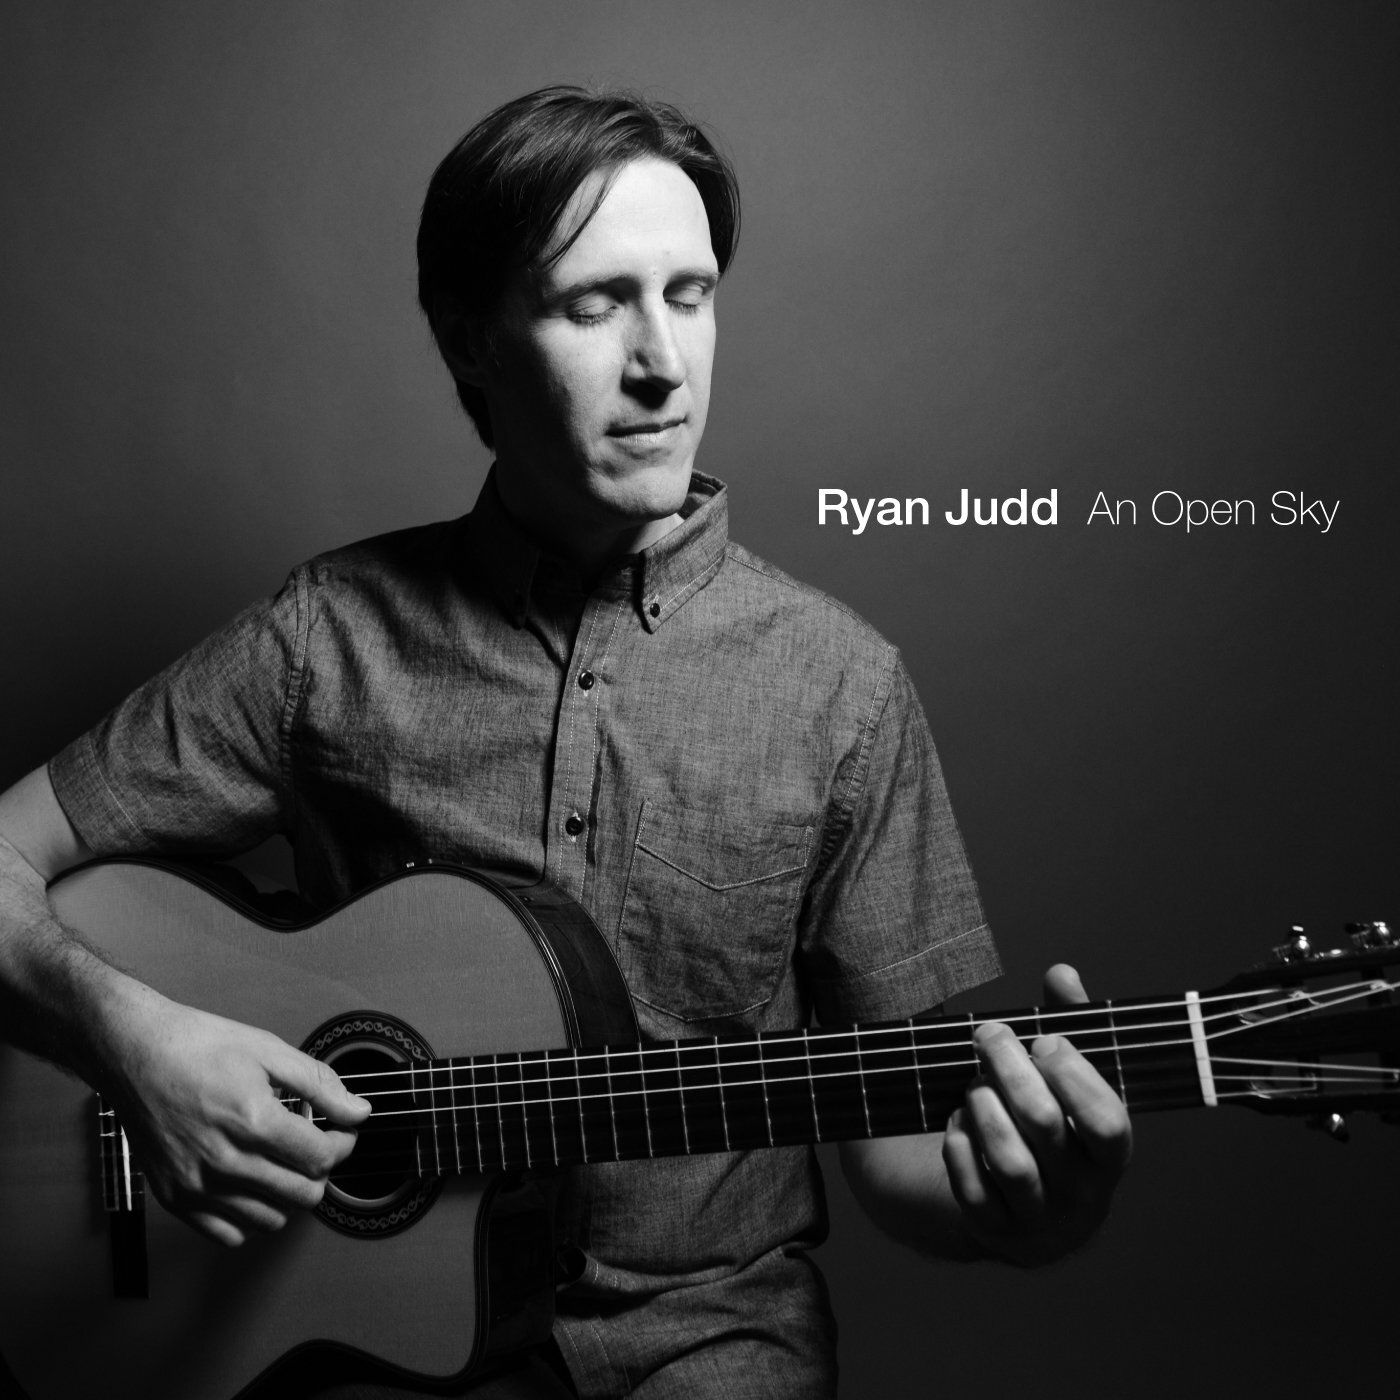 Ryan Judd